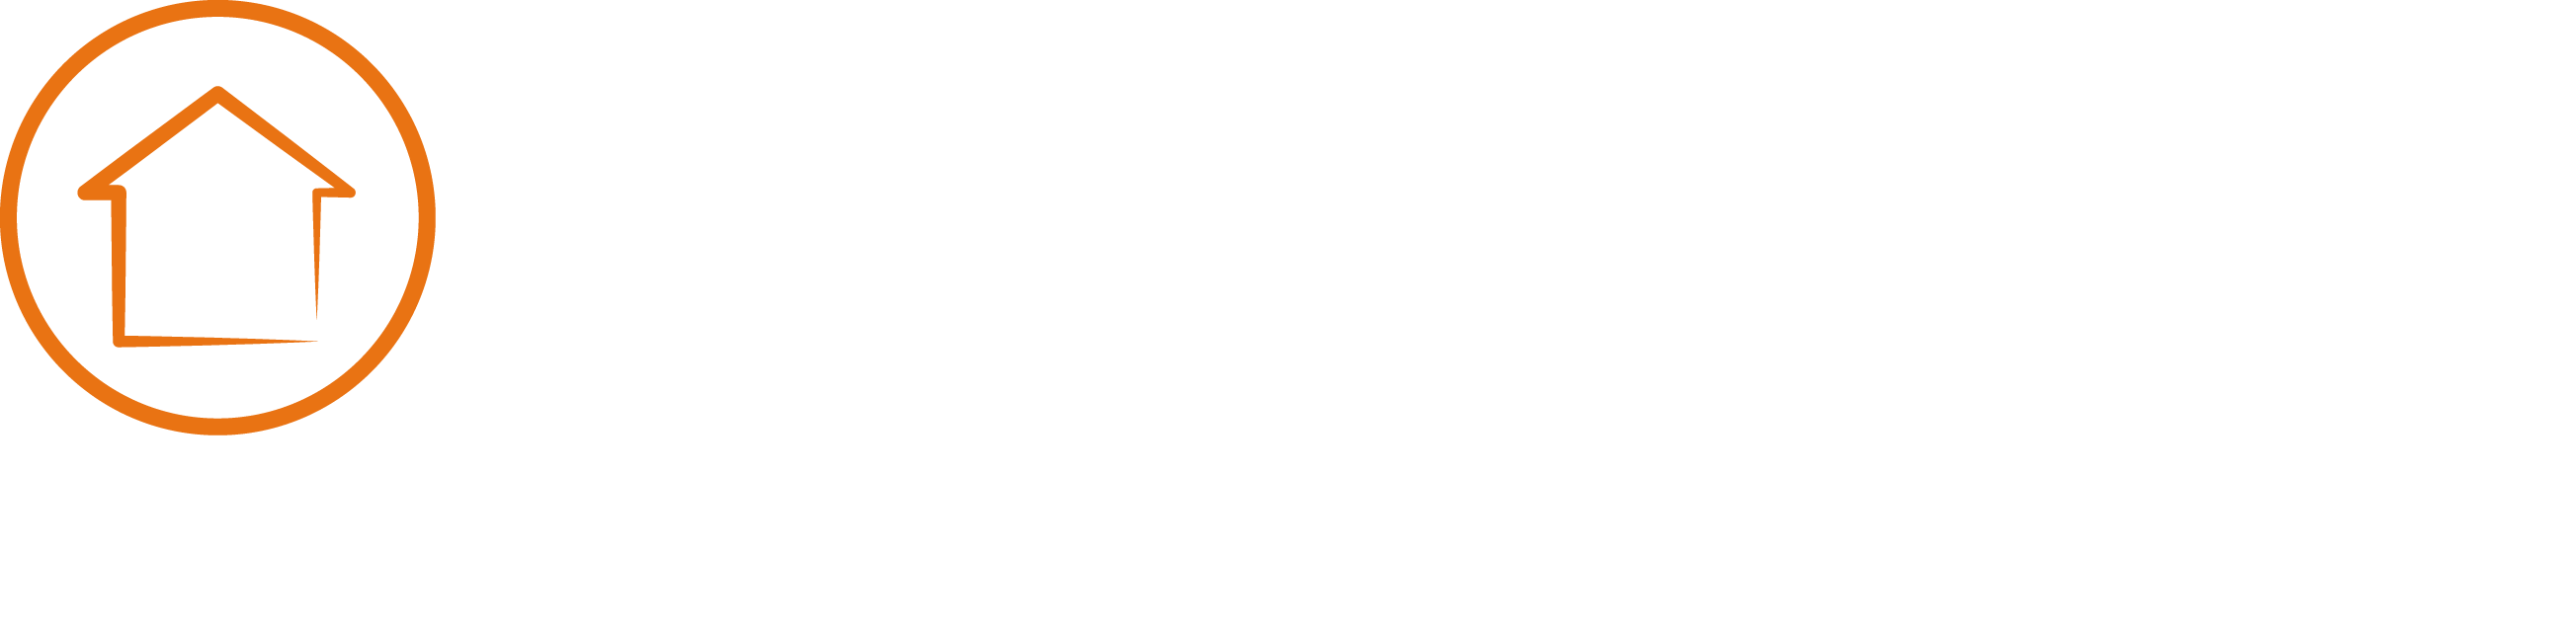 No1 Property Guide